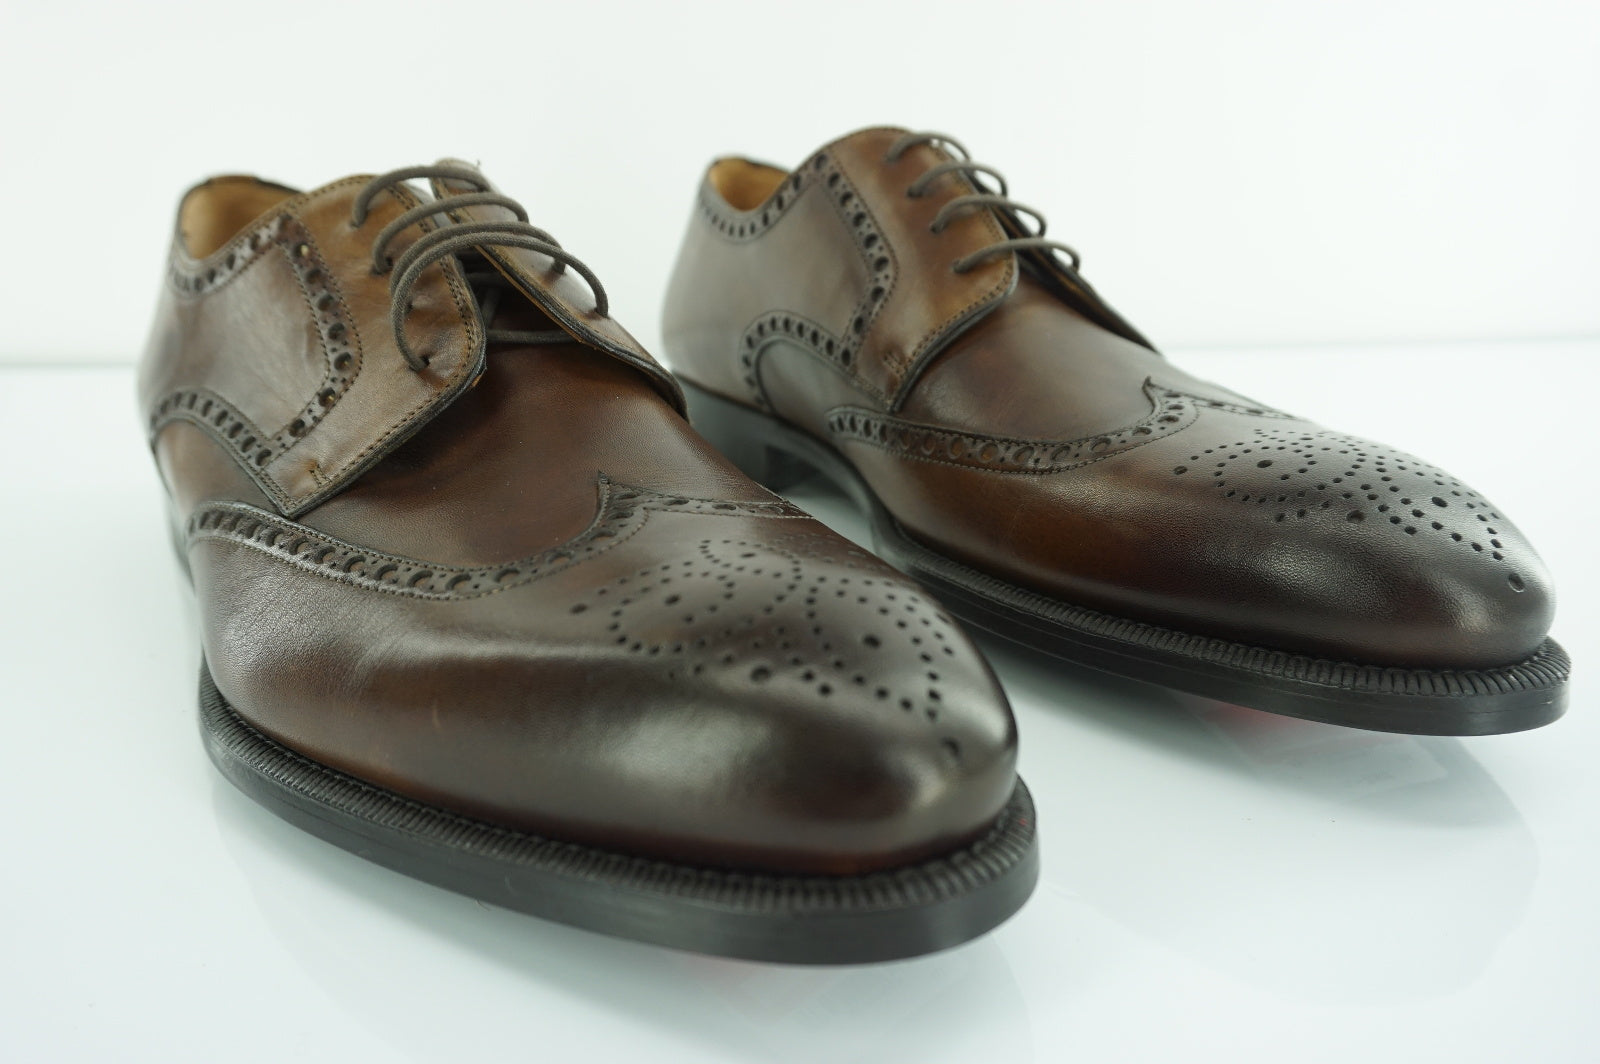 Magnanni Brown Leather Bosca Wingtip Oxfords Dress Shoes size 12 New $395 Men's